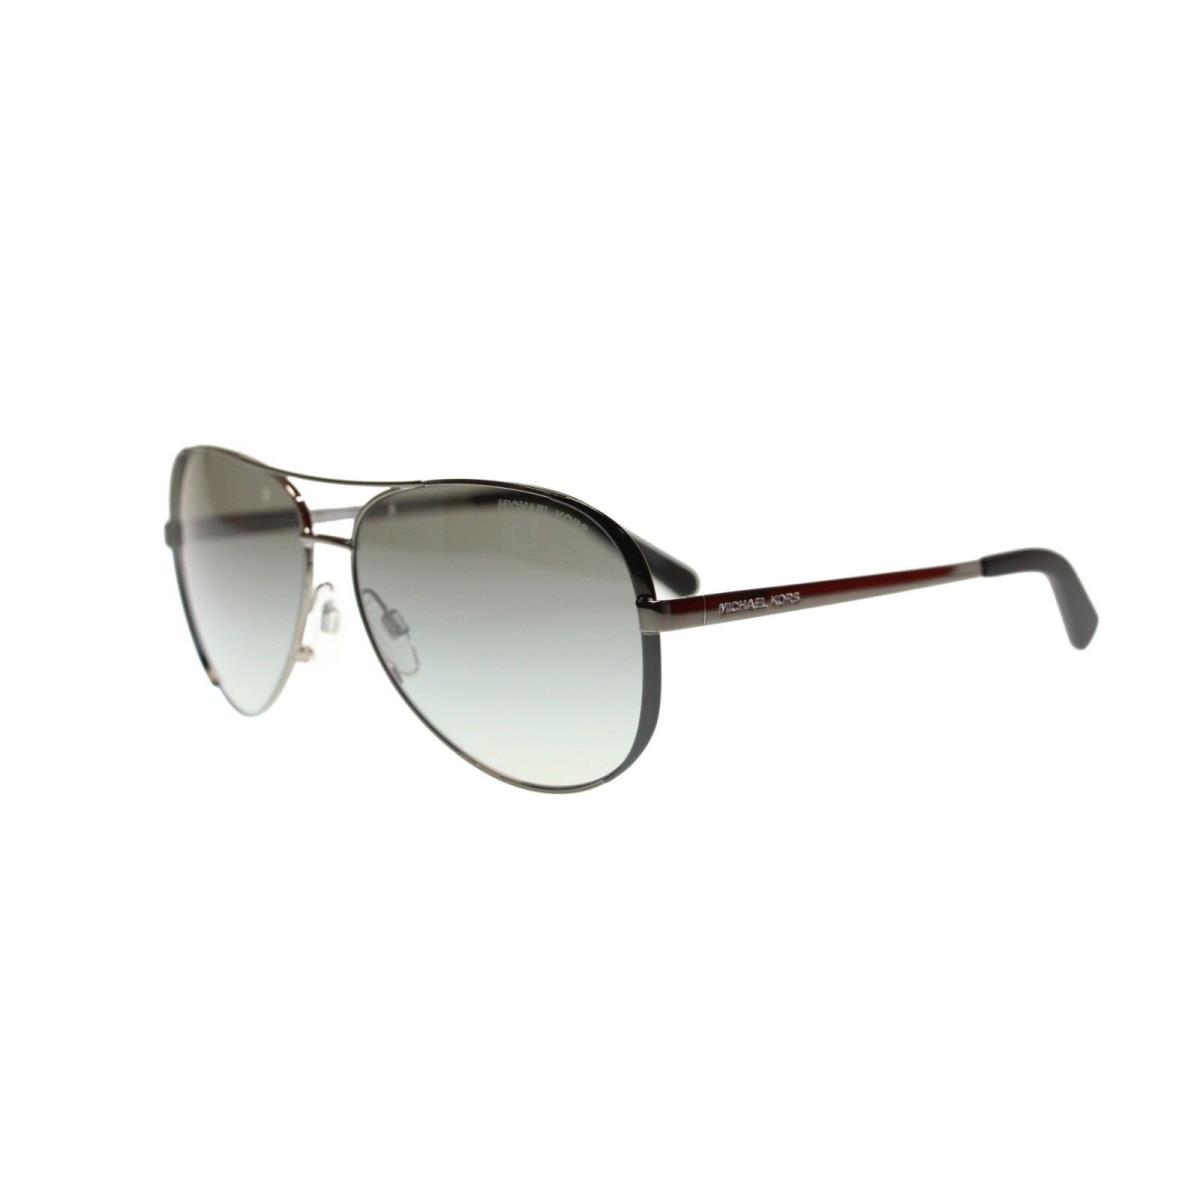 Michael Kors Womens Sunglasses MK5004 101311 Gunmetal Pilot 59mm